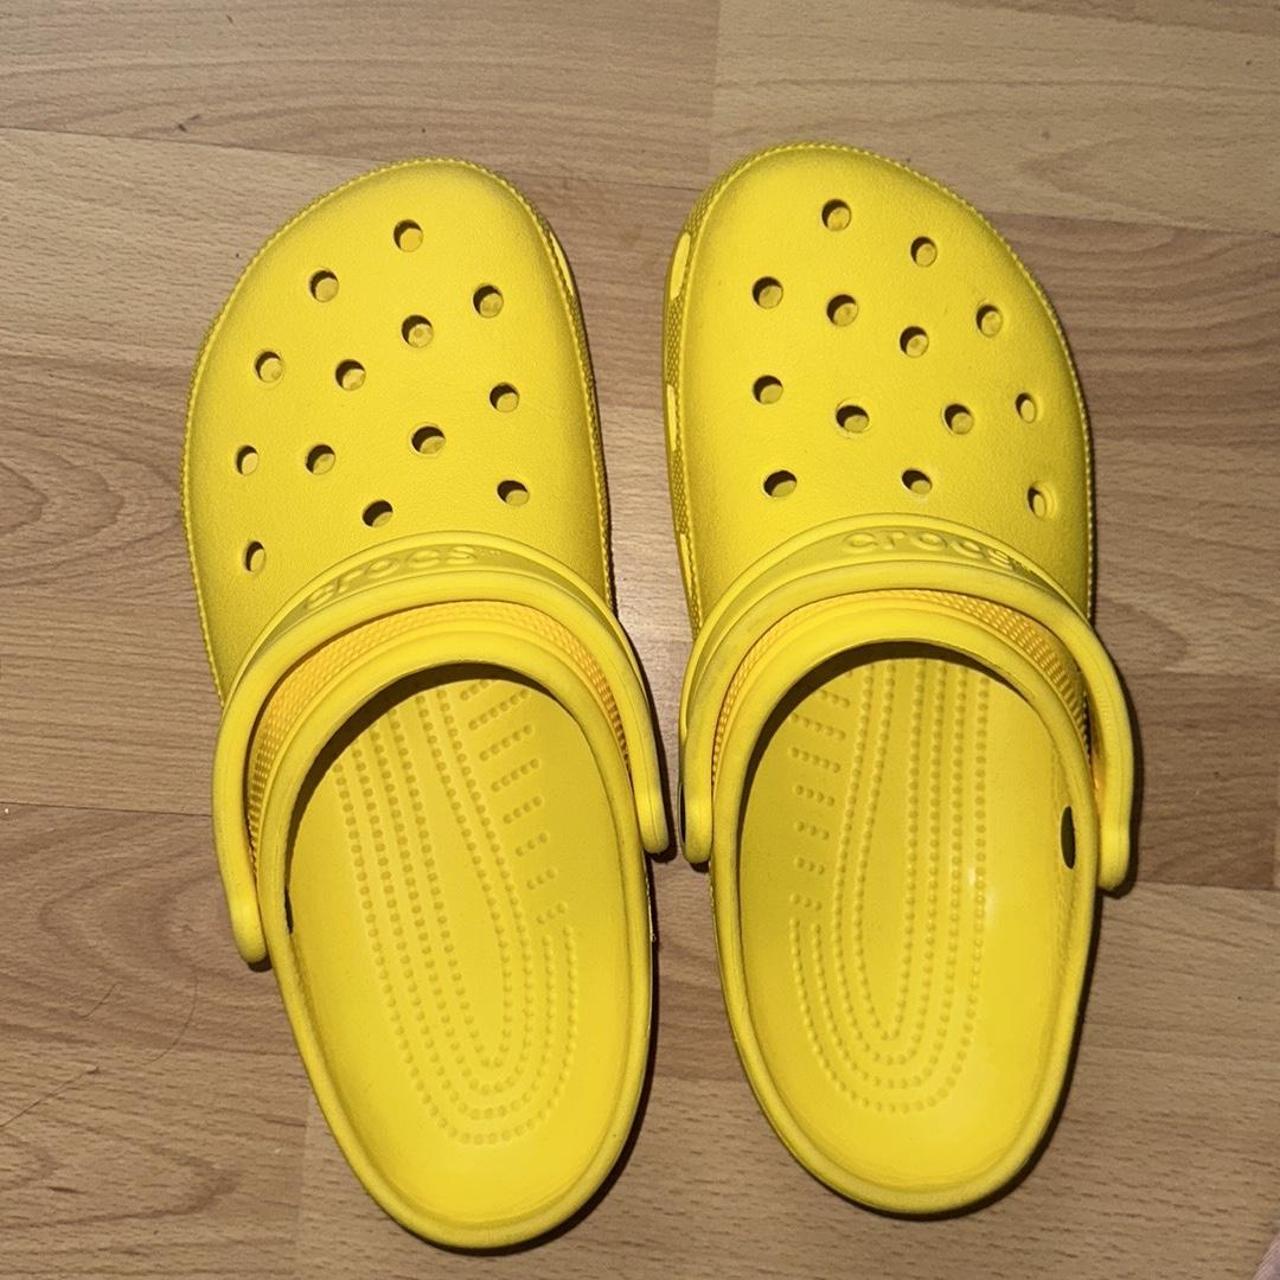 Crocs Men's Yellow Clogs